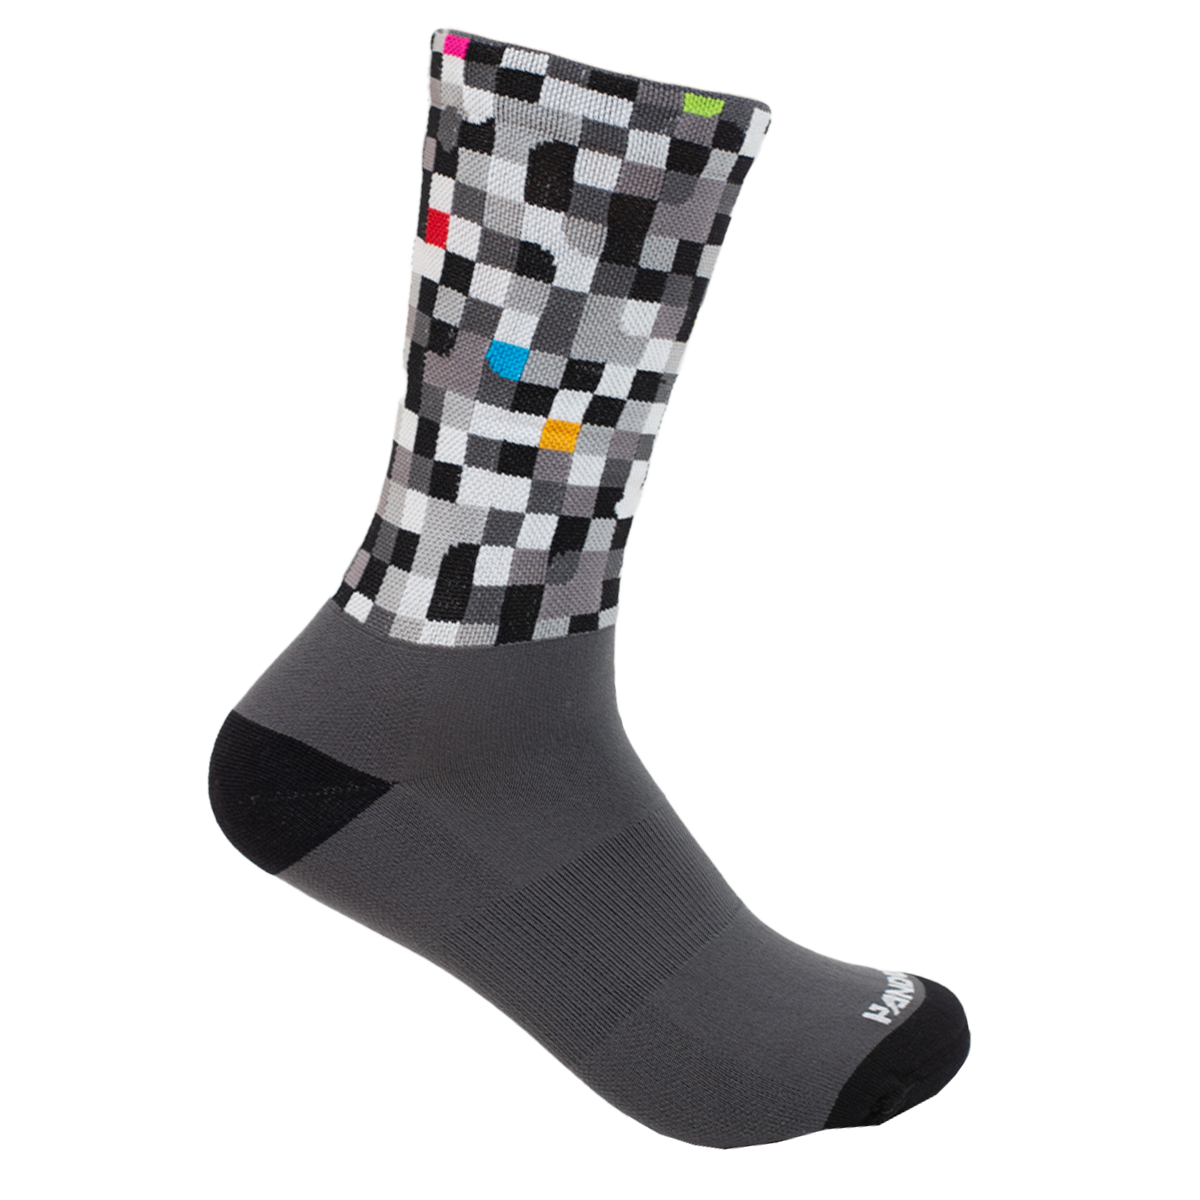 Socks - Pixelated